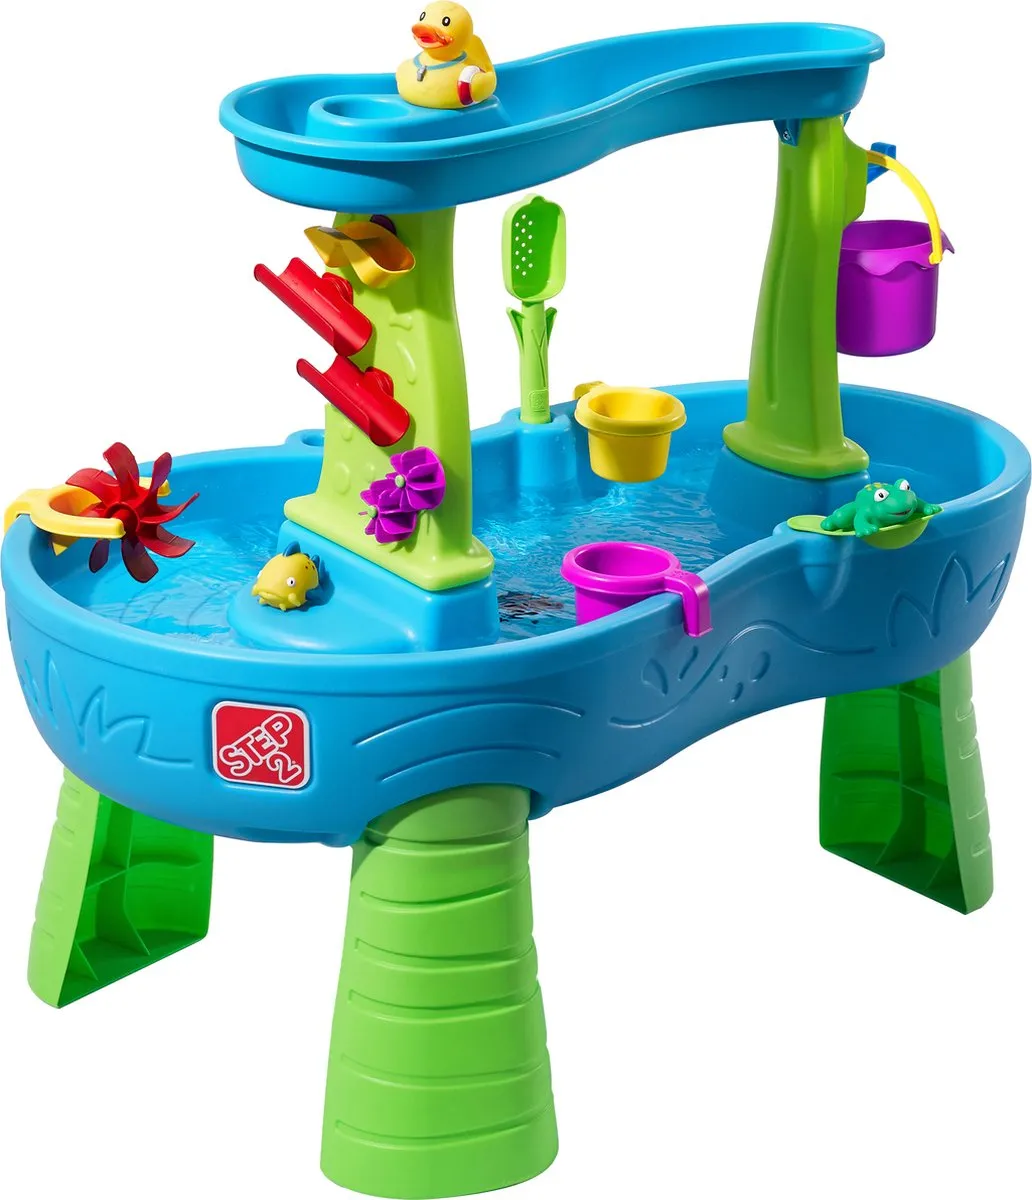 Step2 Rain Showers Splash Pond Watertafel - Met 13-delig accessoireset - Waterspeelgoed voor kind - Activiteitentafel met water voor de tuin / buiten speelgoed